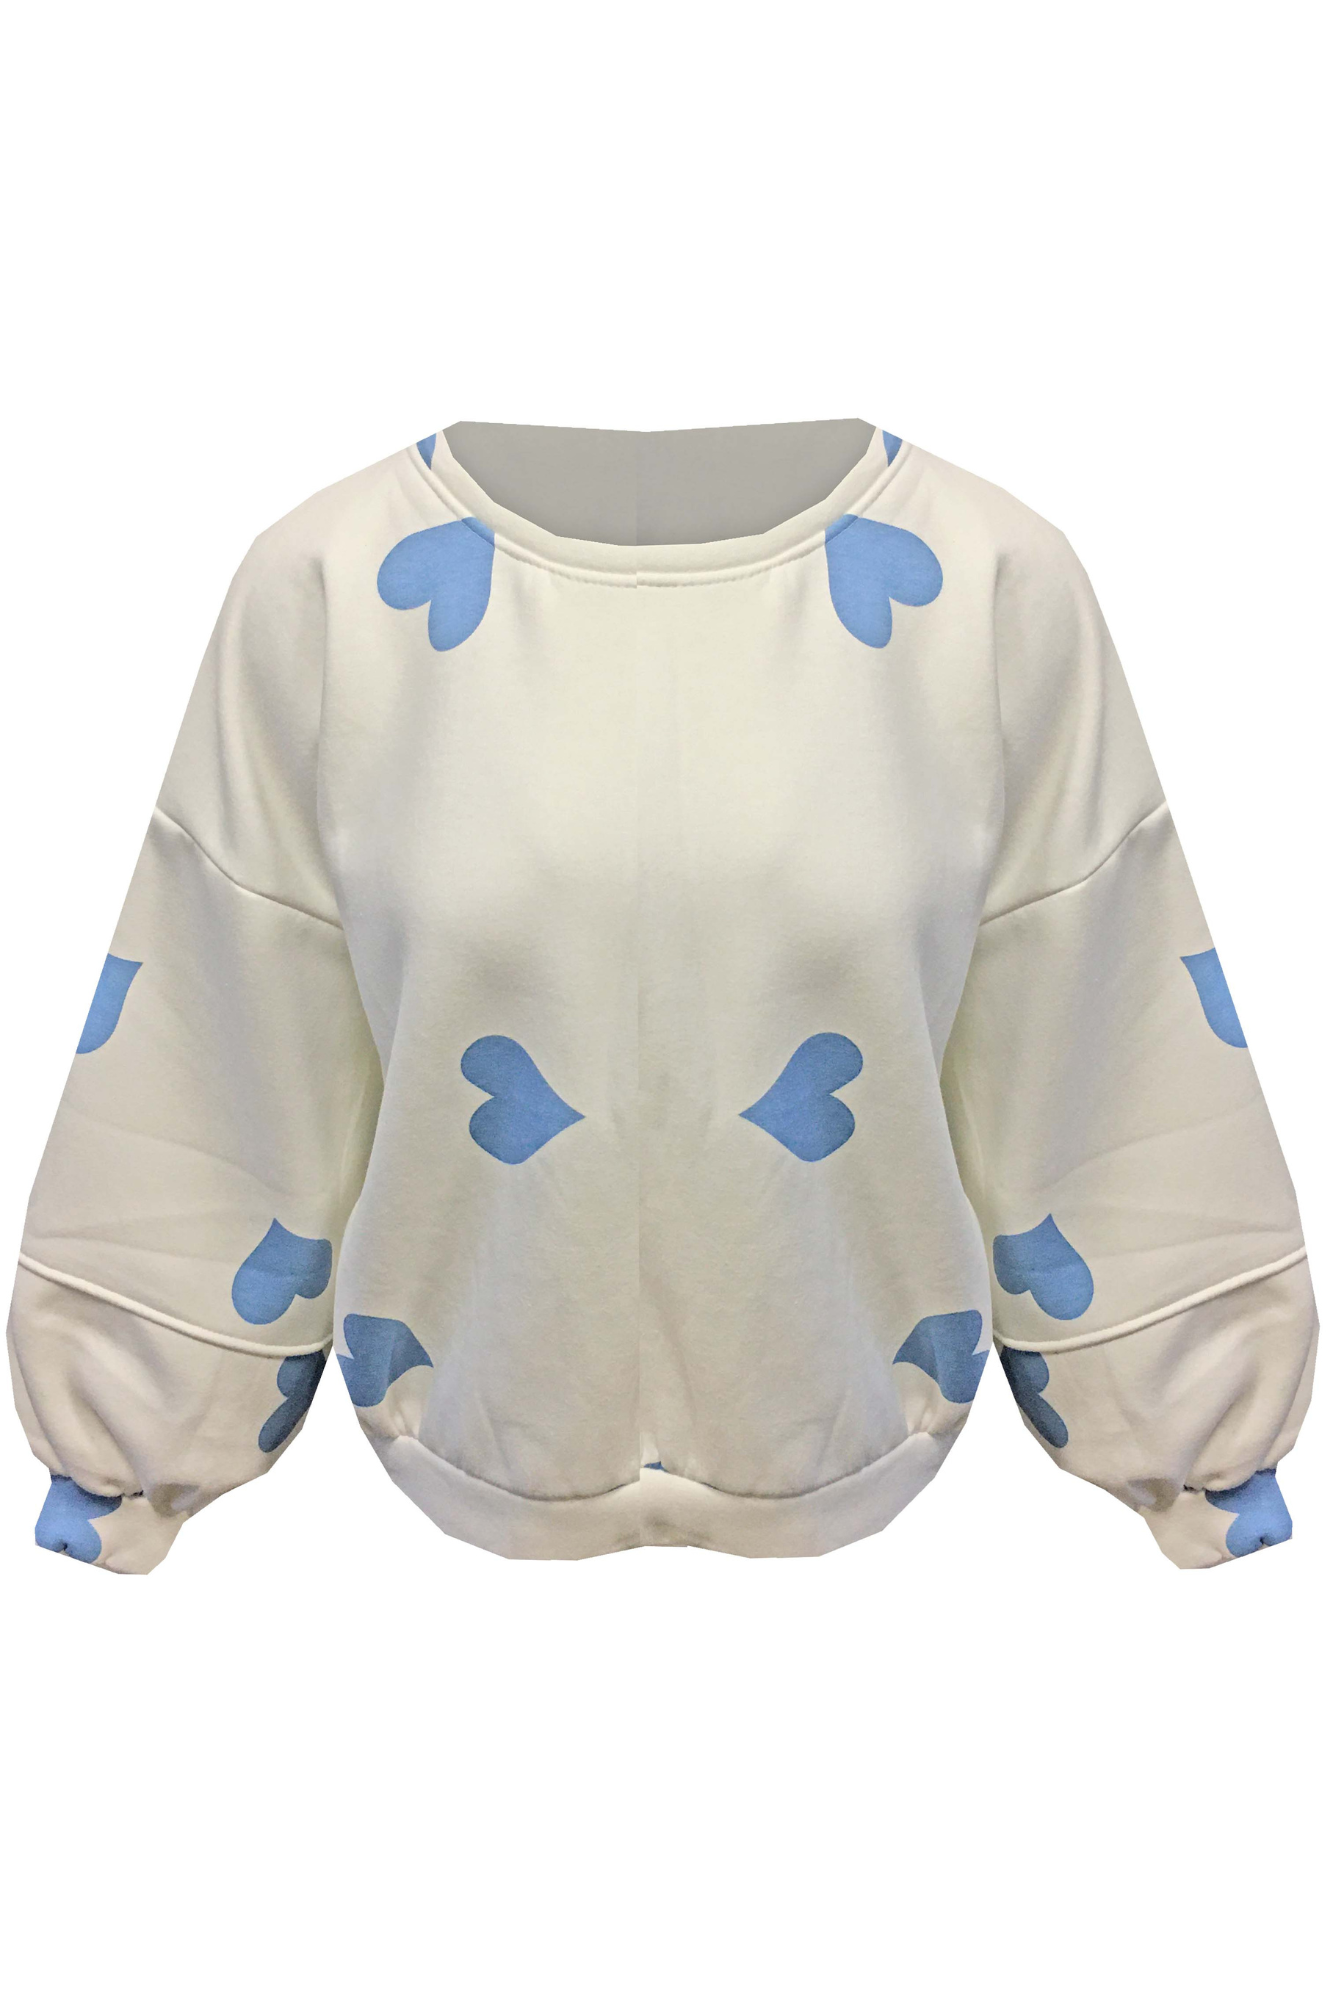 Image Minna sweater hearts ecru/lichtblauw